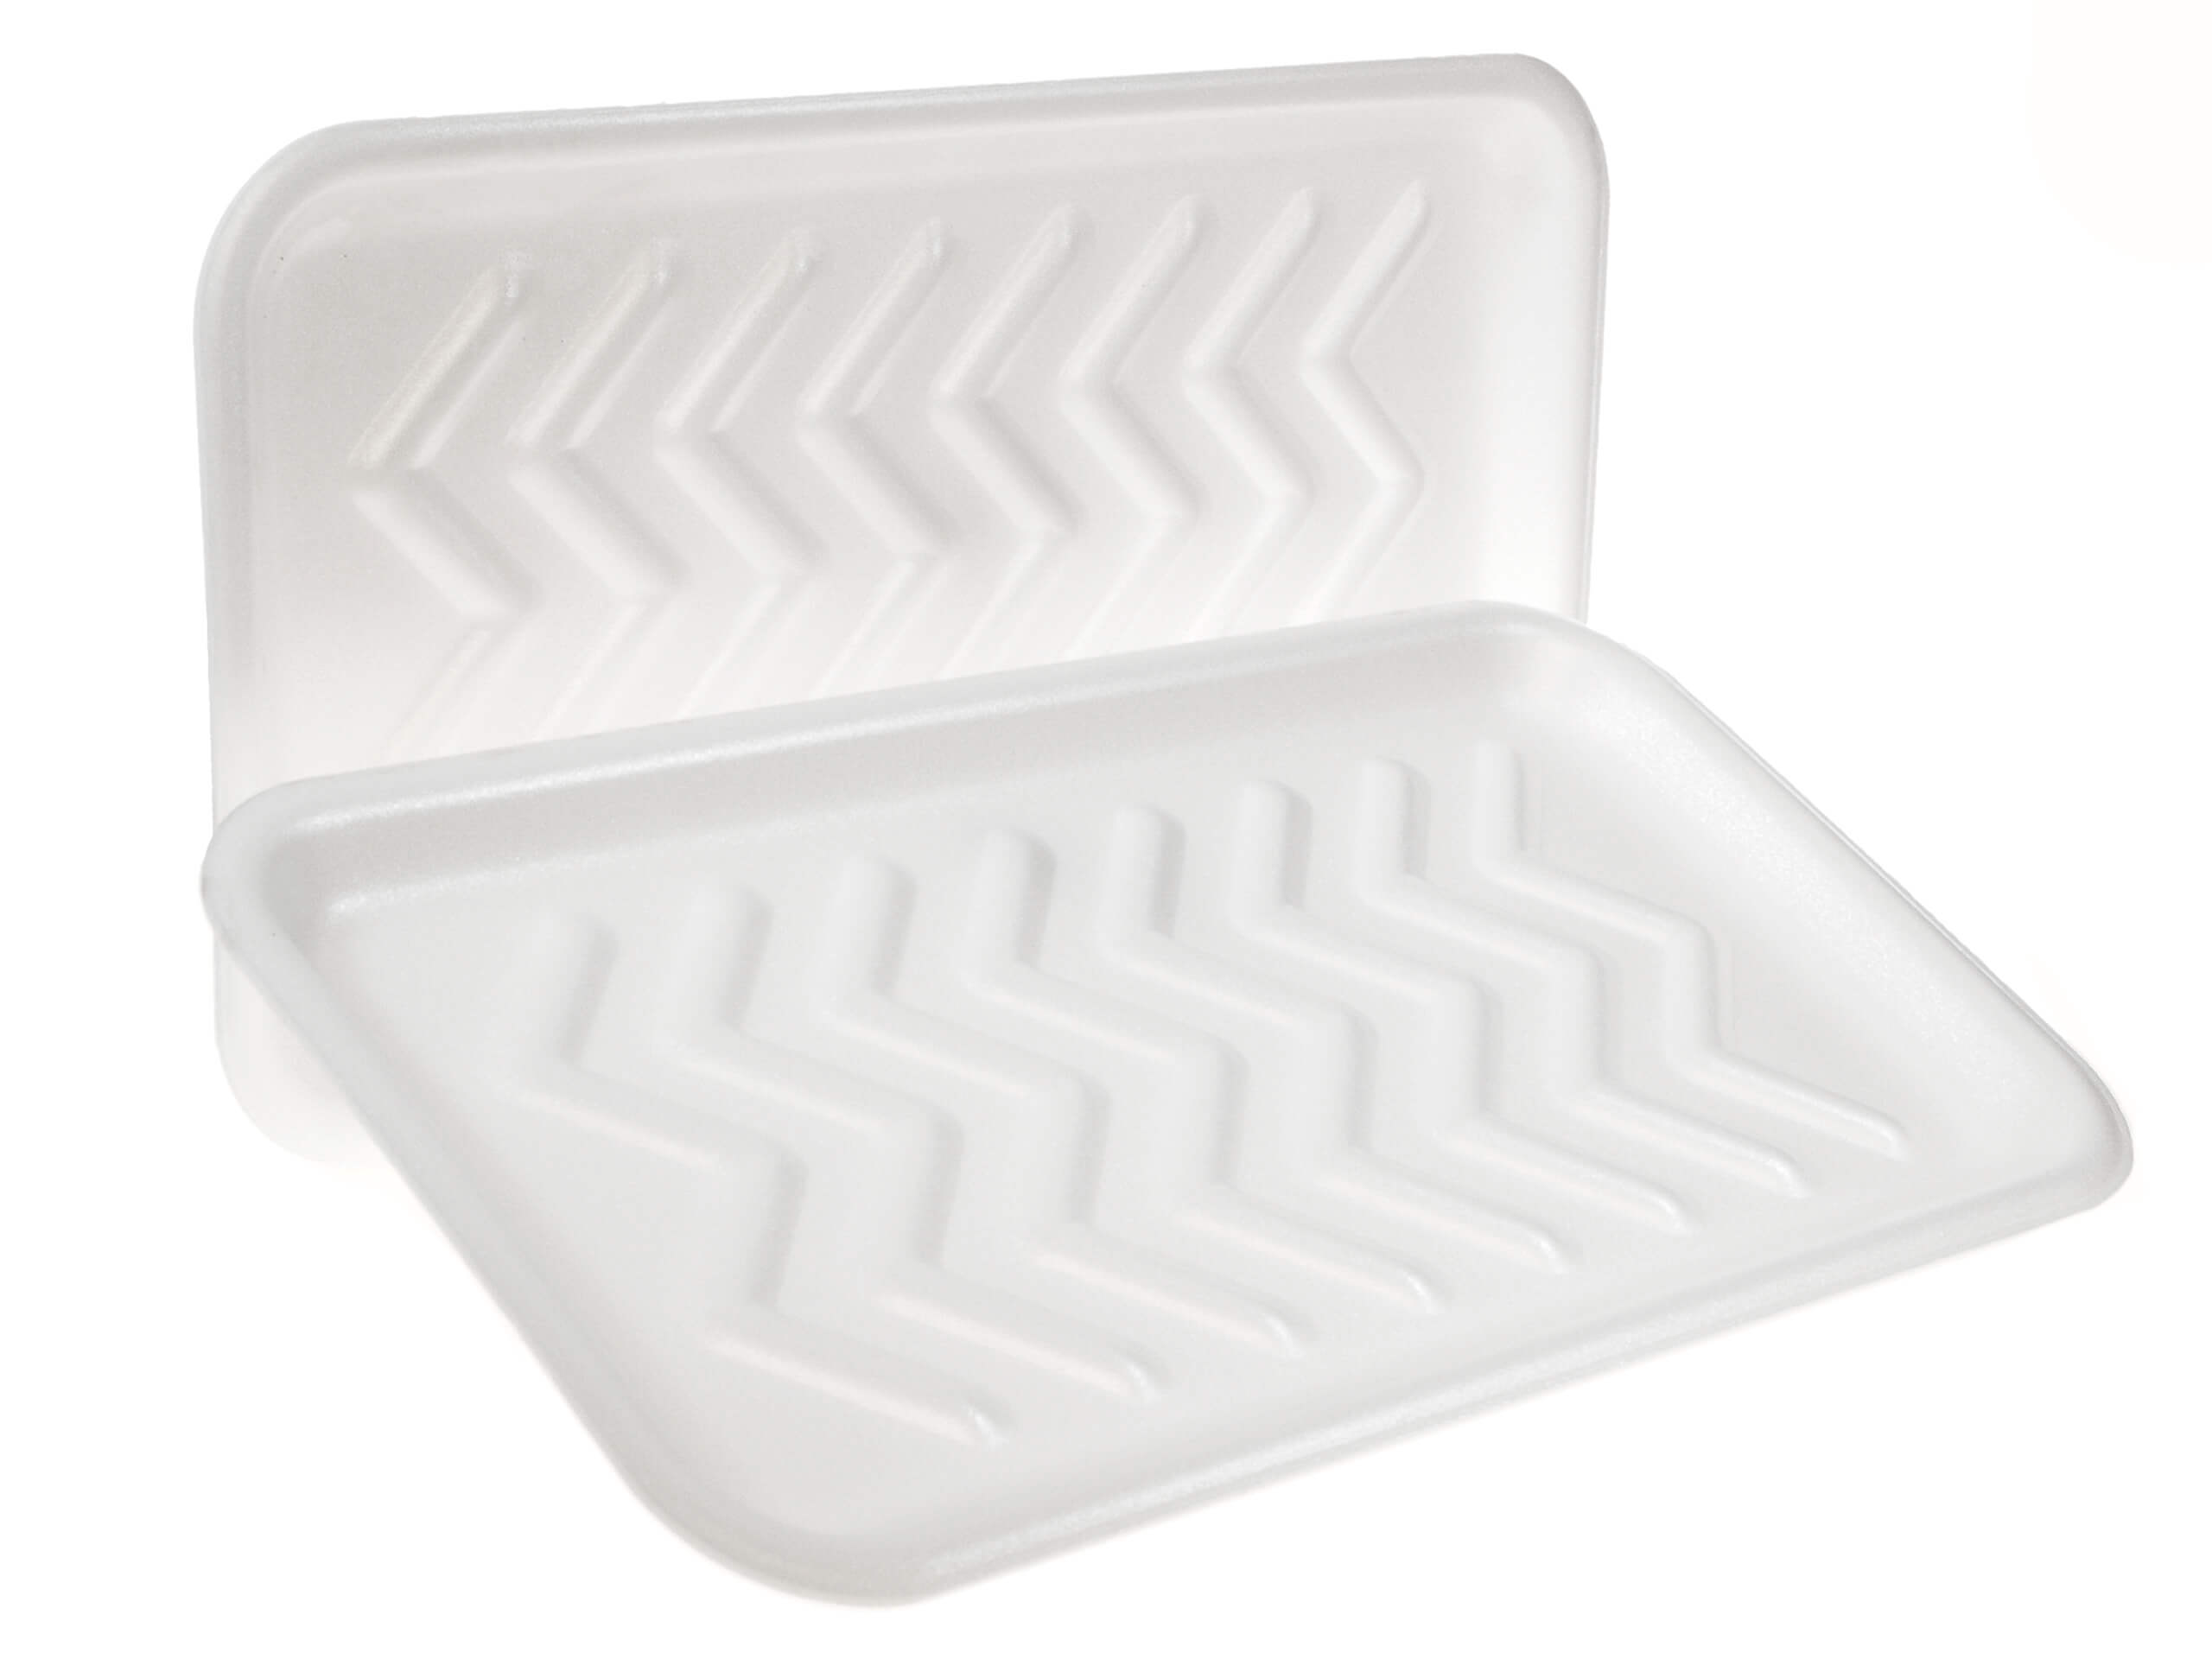  RIKICACA White Styrofoam Meat Trays (25pcs/Pack - 7.87